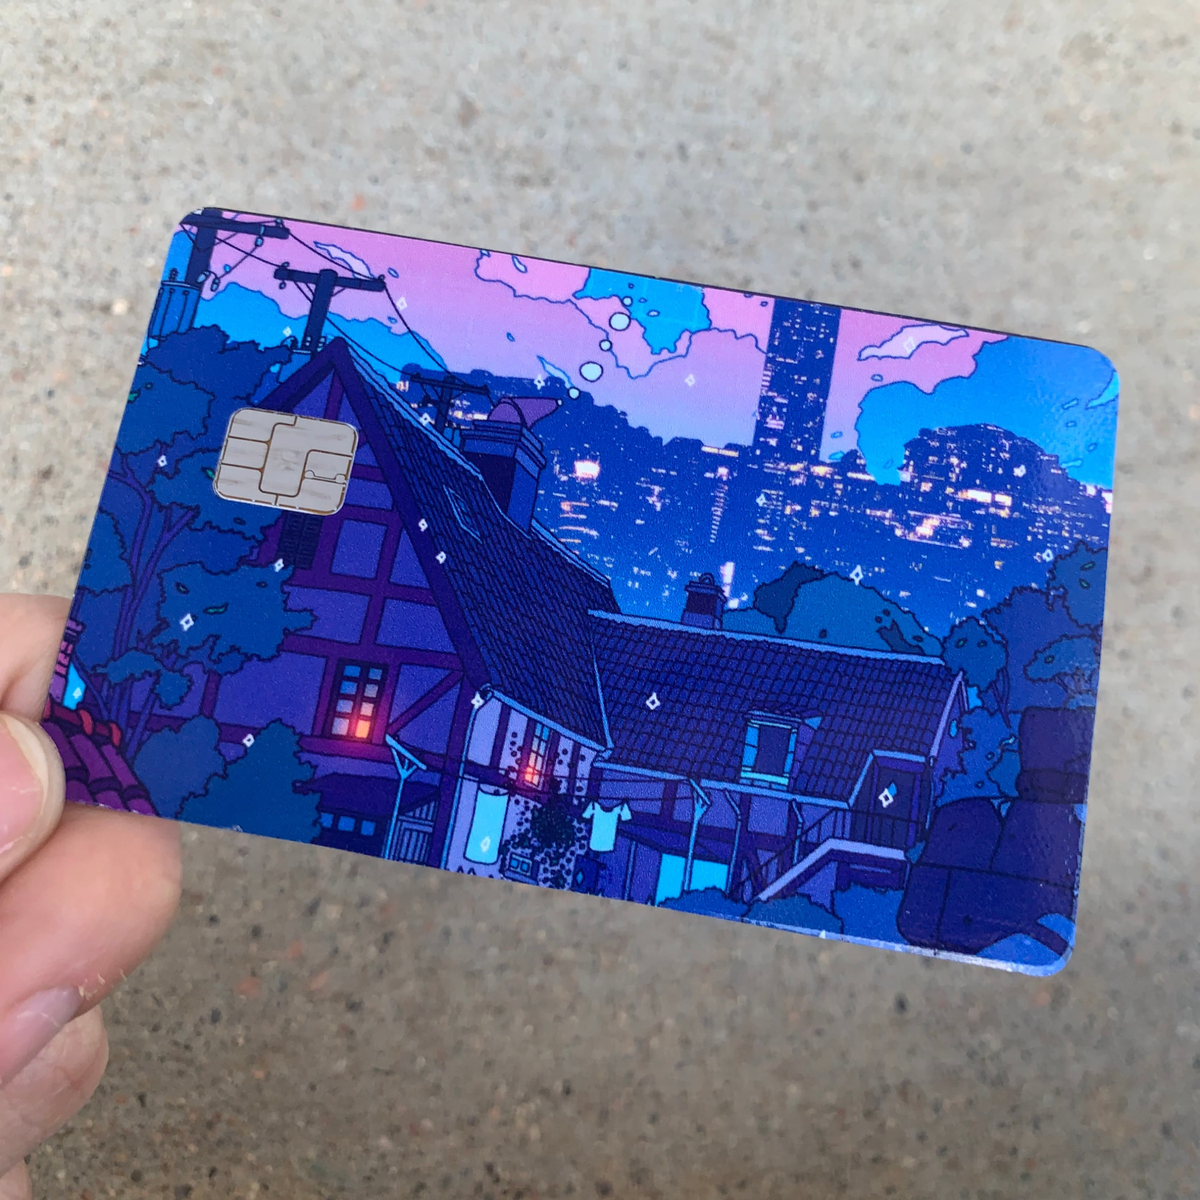 Customer showcasing their personalized anime debit credit card skin